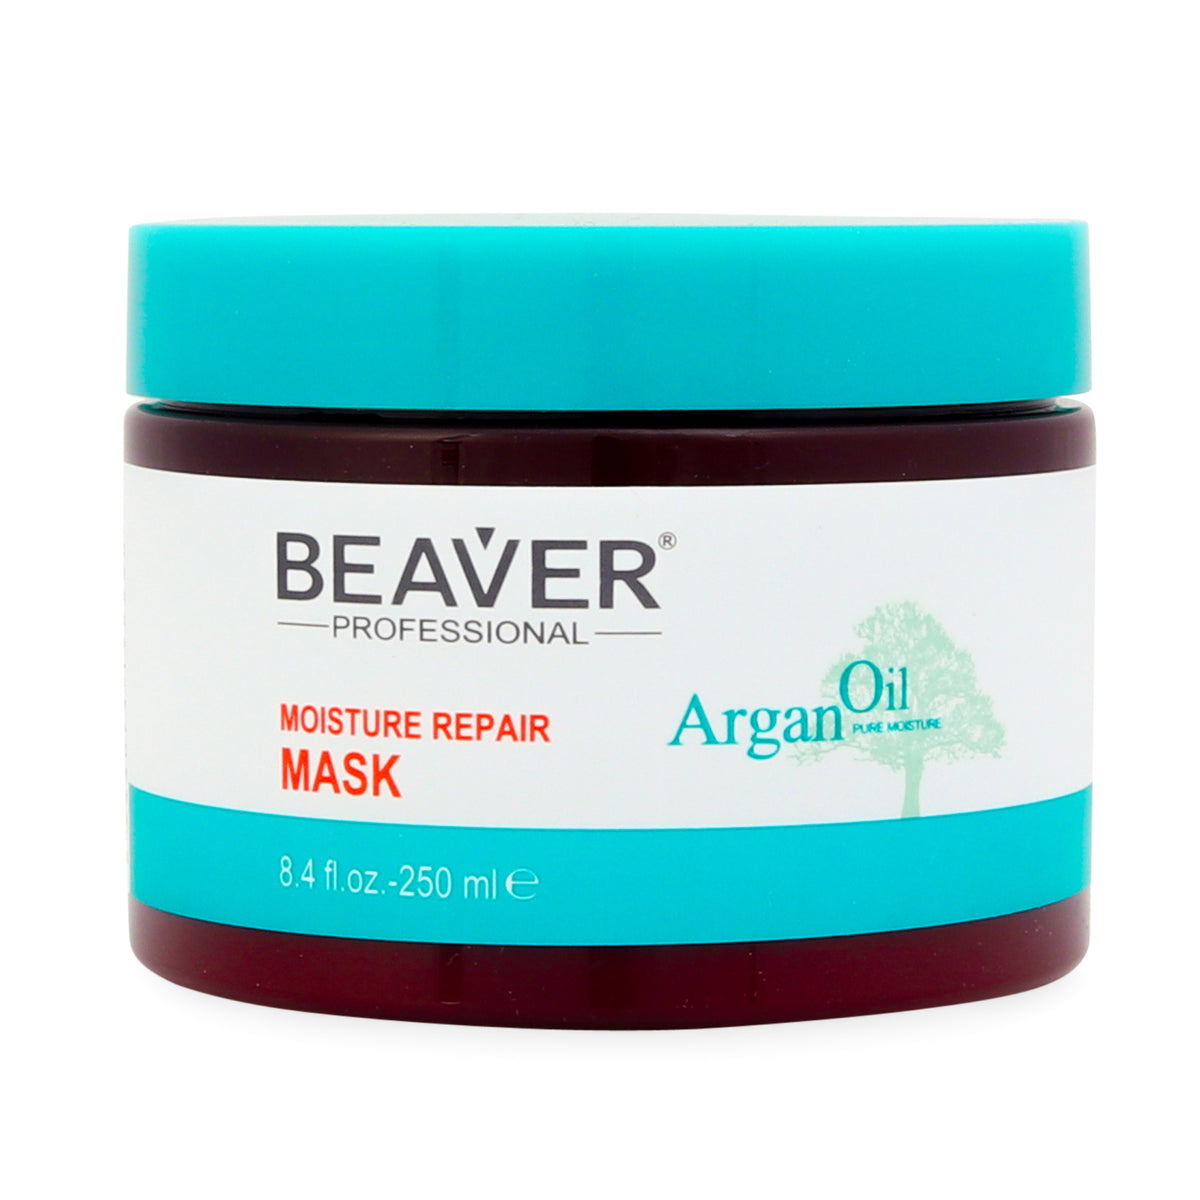 Beaver Argan Oil Moisture Repair Hair Mask 250 ml | Your Beauty Products